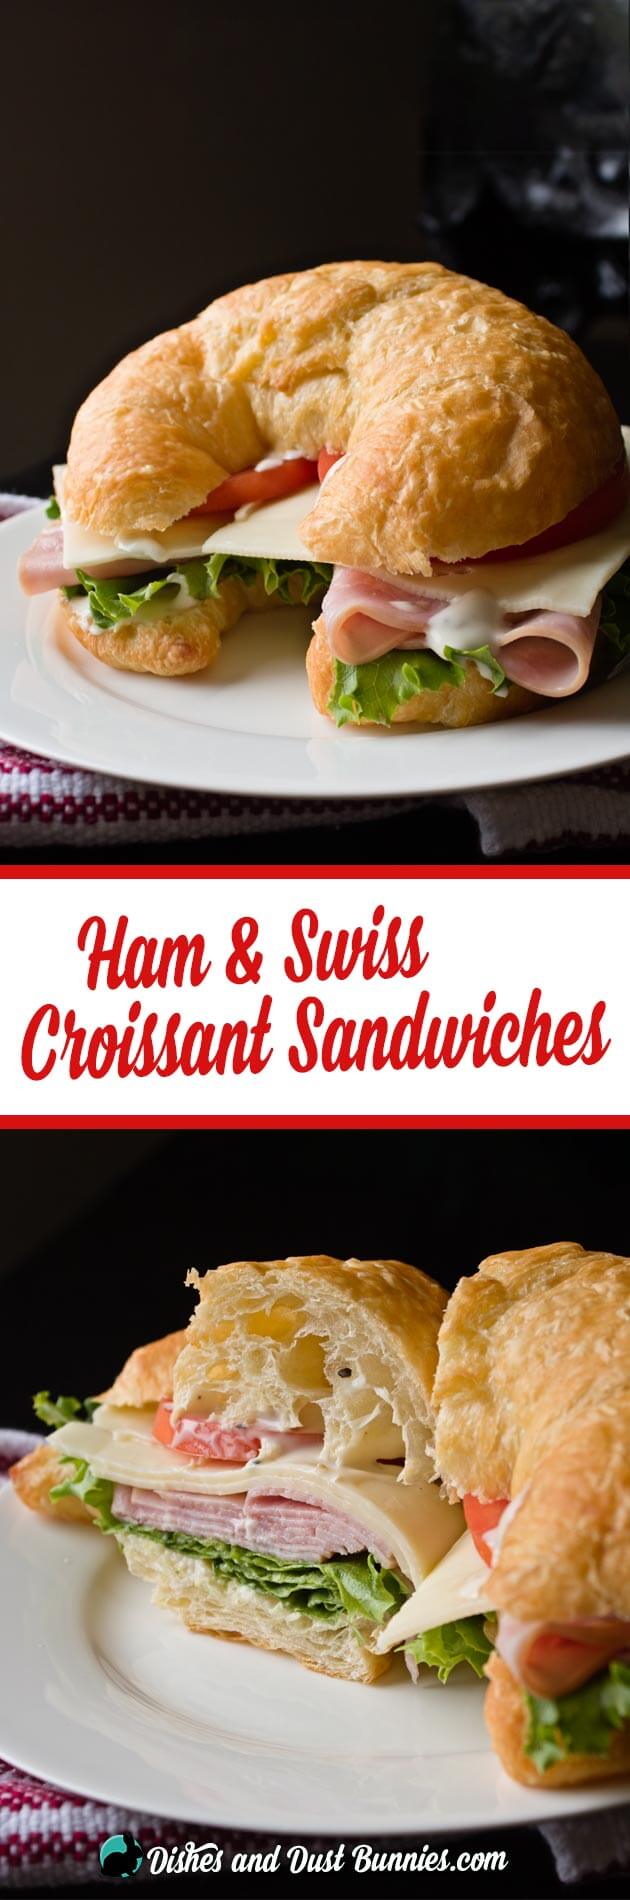 Ham and Swiss Croissant Sandwiches from dishesanddustbunnies.com